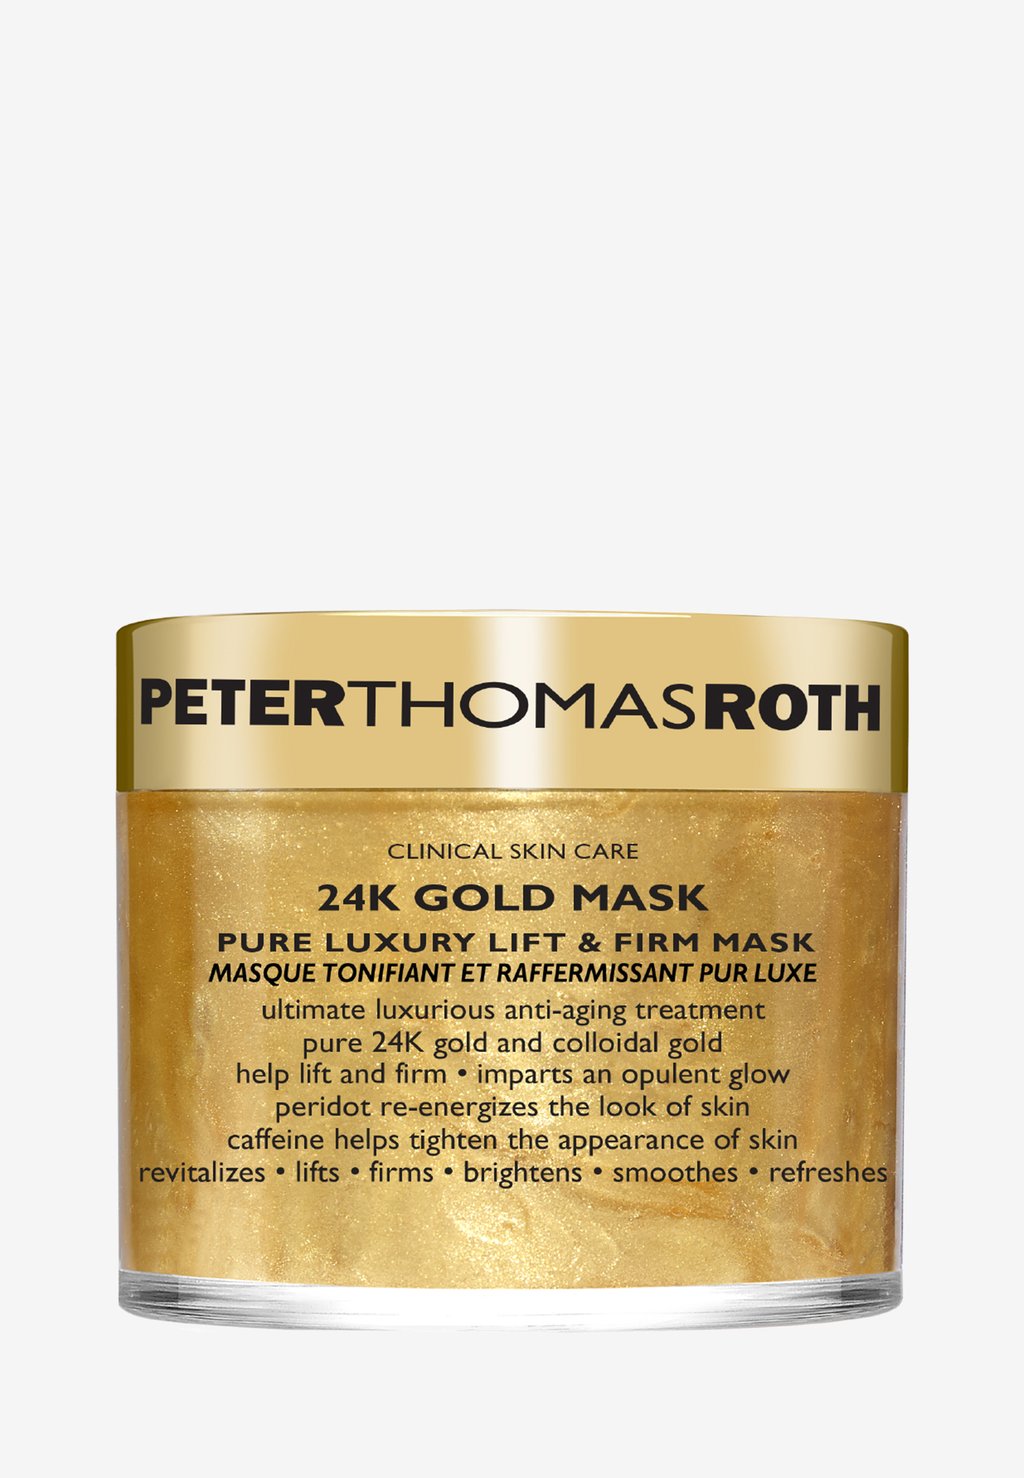 Маска для лица 24K Gold Mask Peter Thomas Roth peter thomas roth irish moor mud purifying black mask